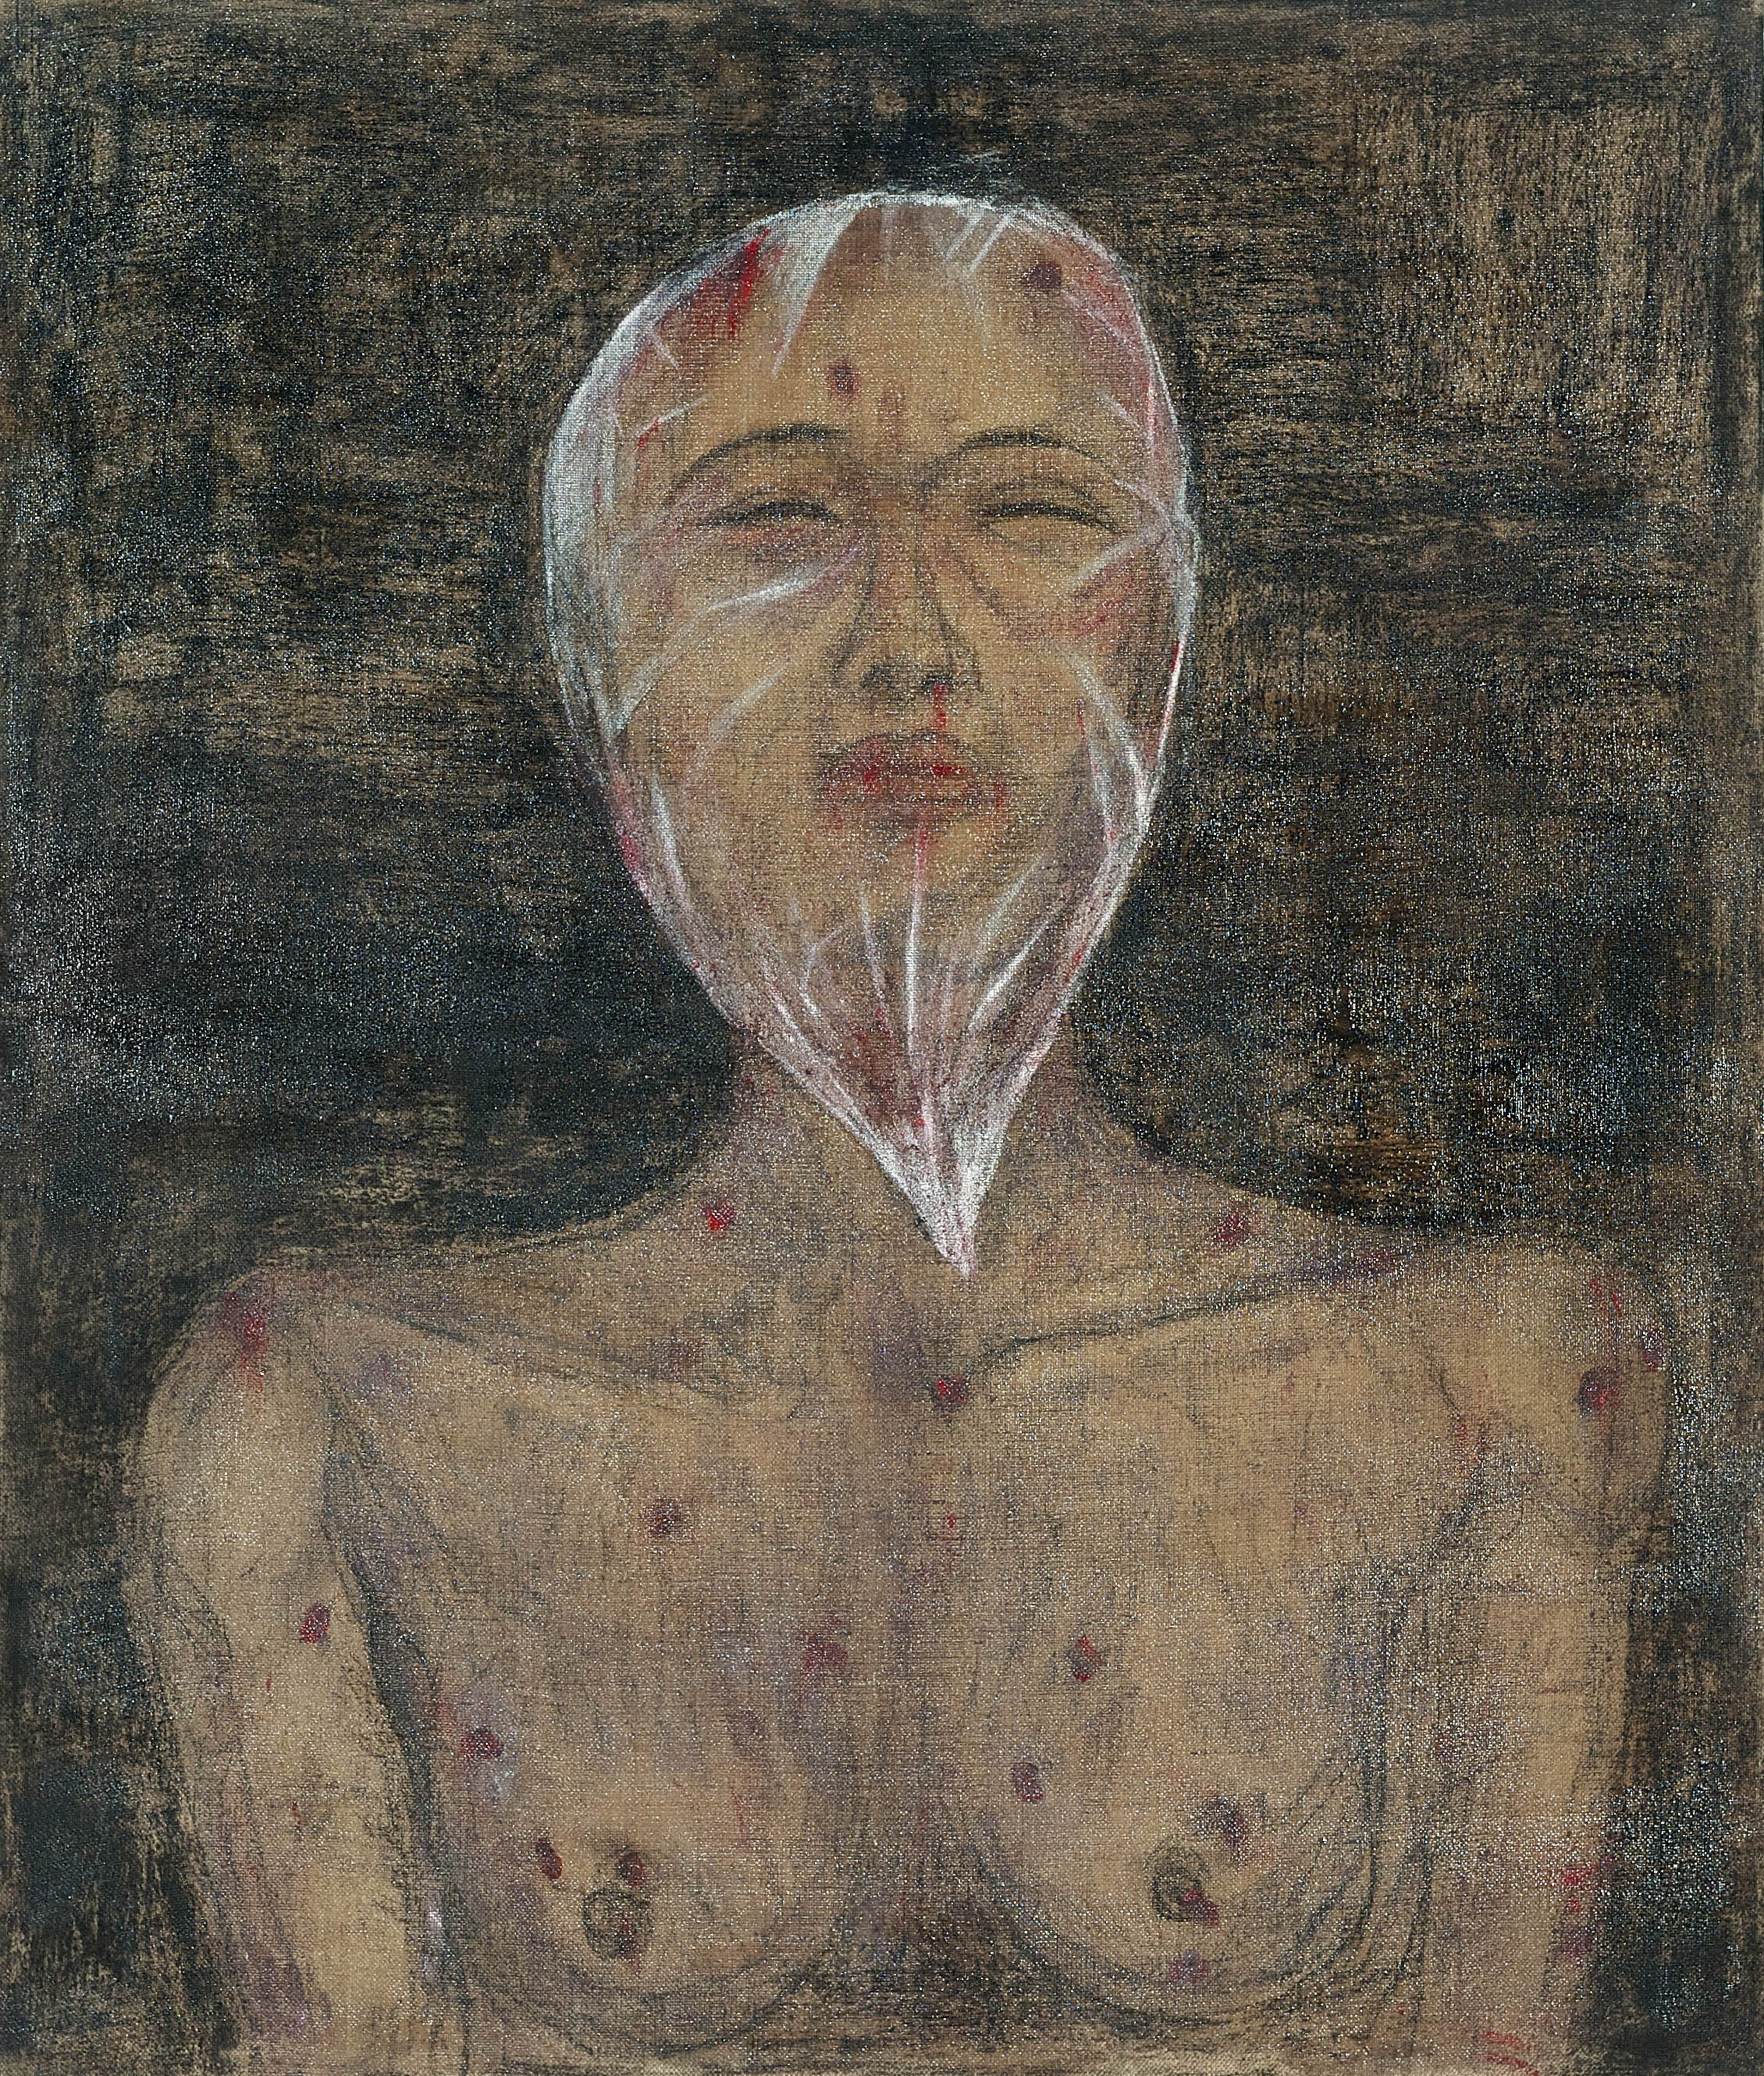 Ciduk, Siksa, Bunuh, Buang V (2018) Acrylic and charcoal on canvas; 170cm x 145cm